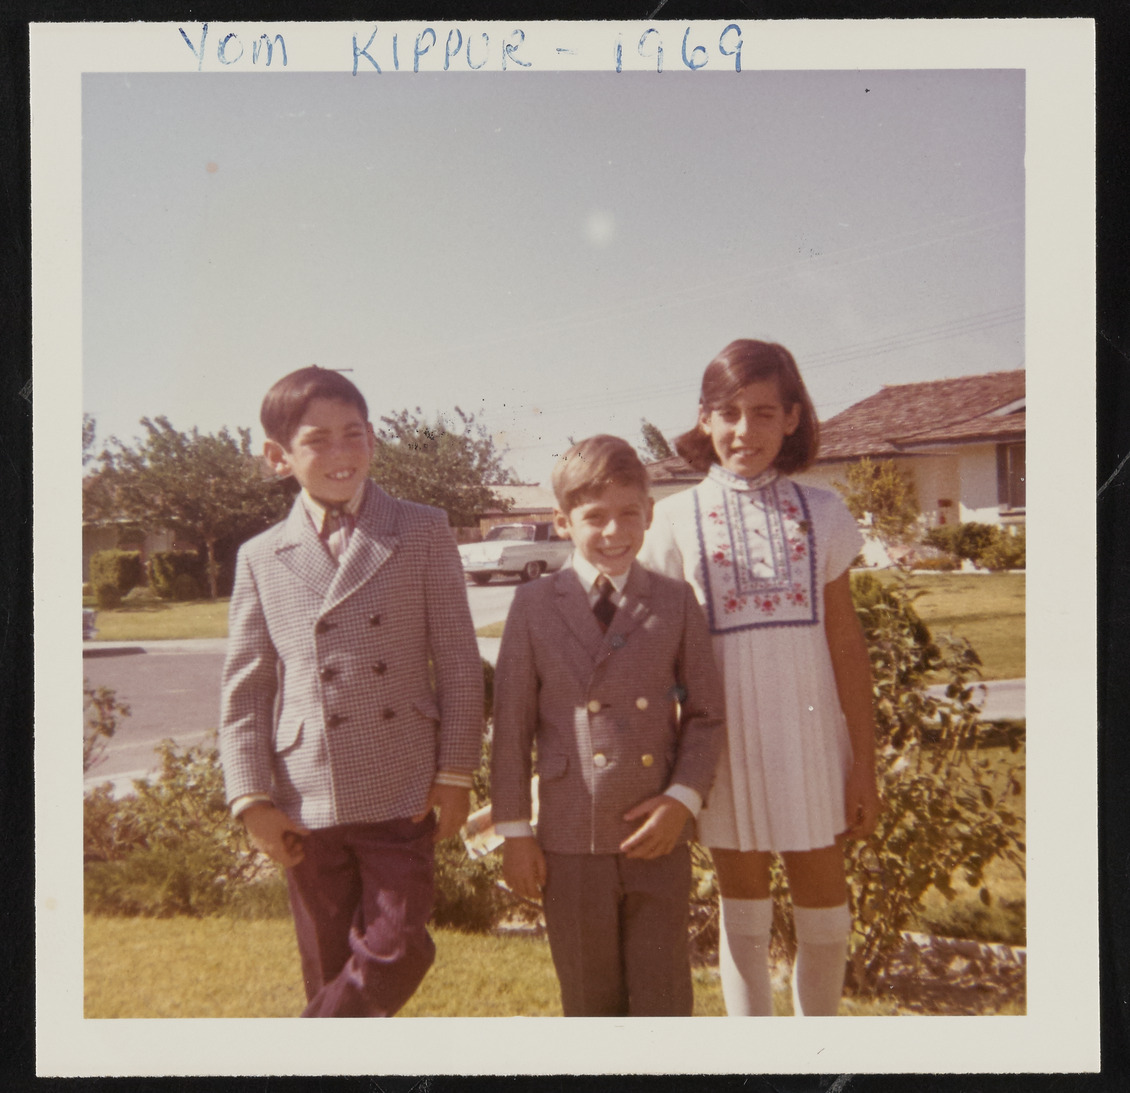 Mason Family, image 08, 1969